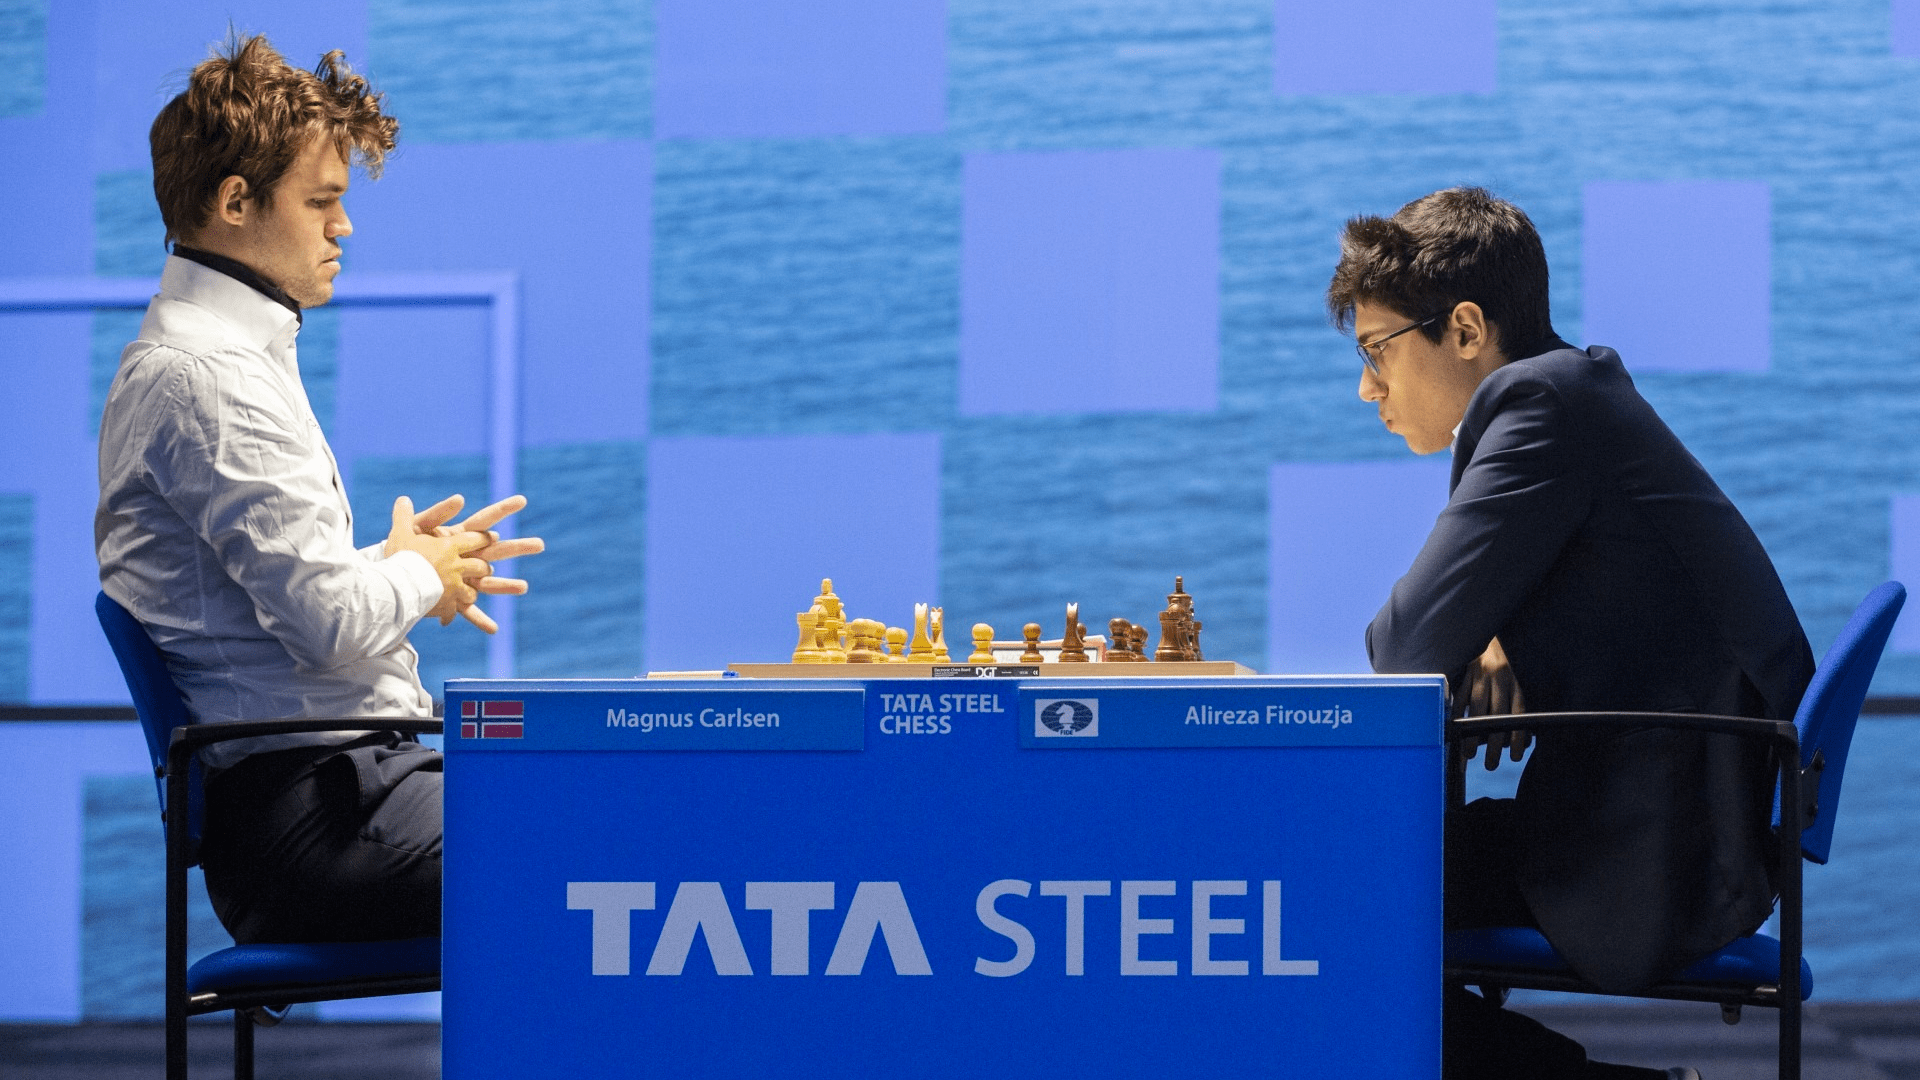 Rodada 4, Tata Steel Chess 2021